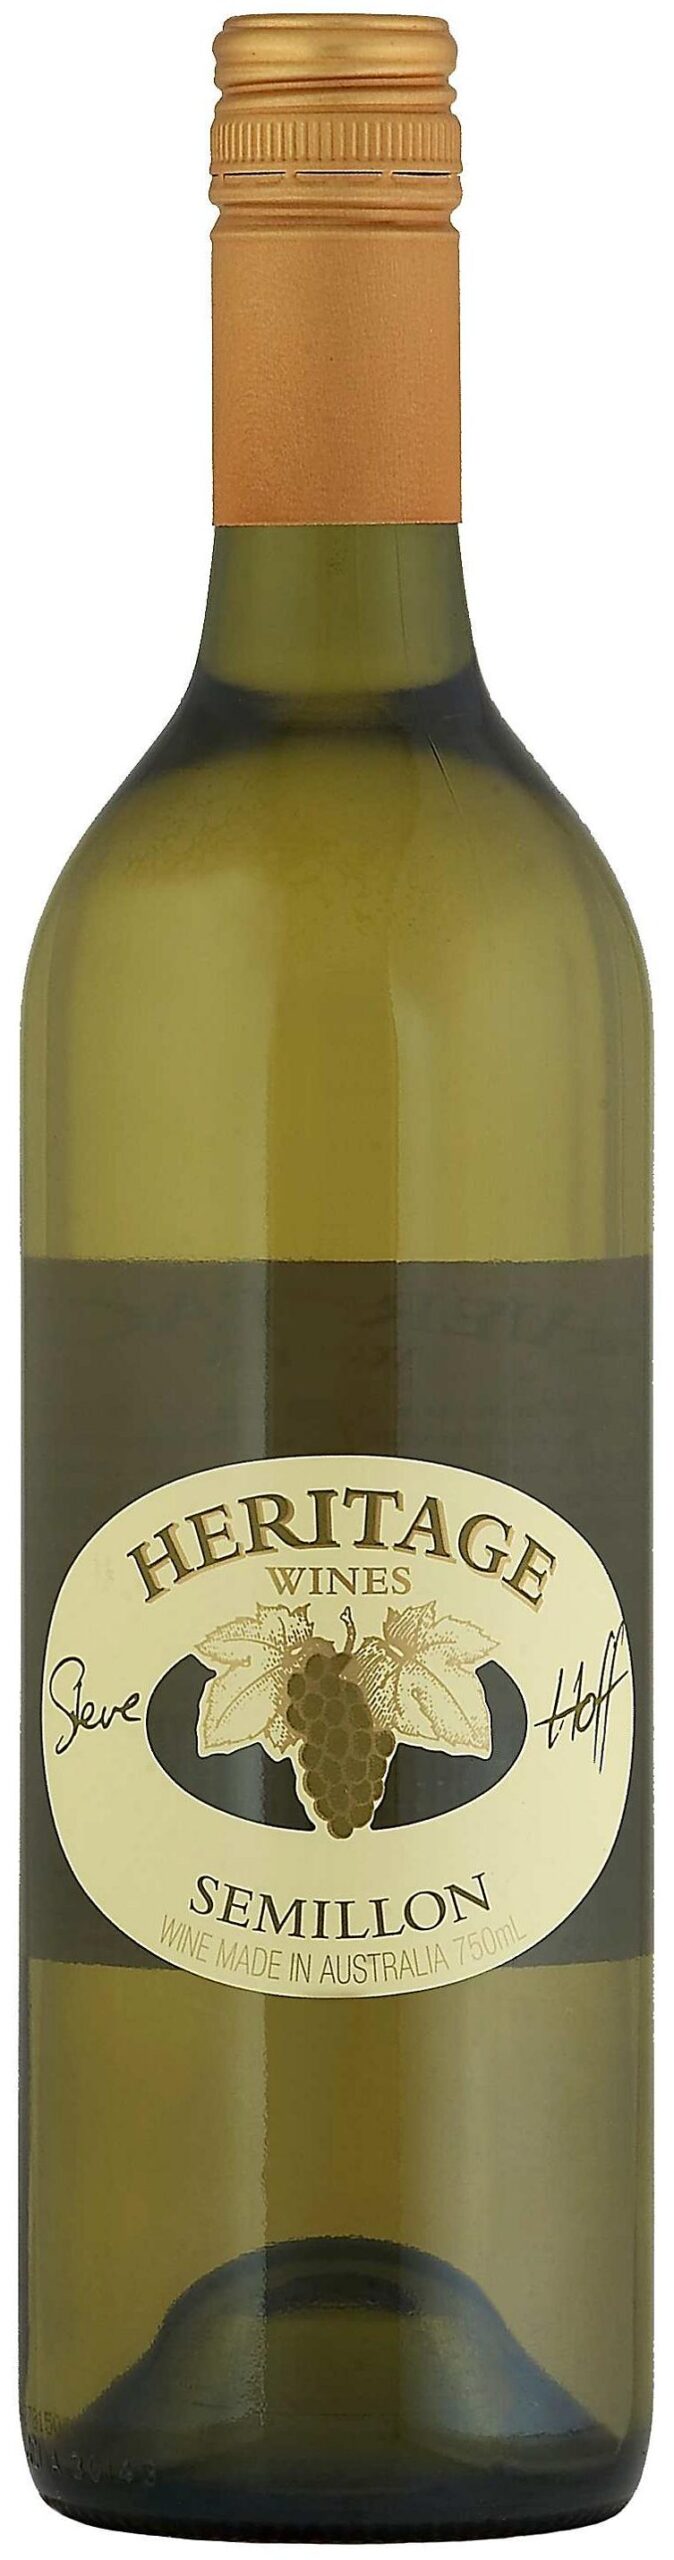 Heritage Wines Semillon NV